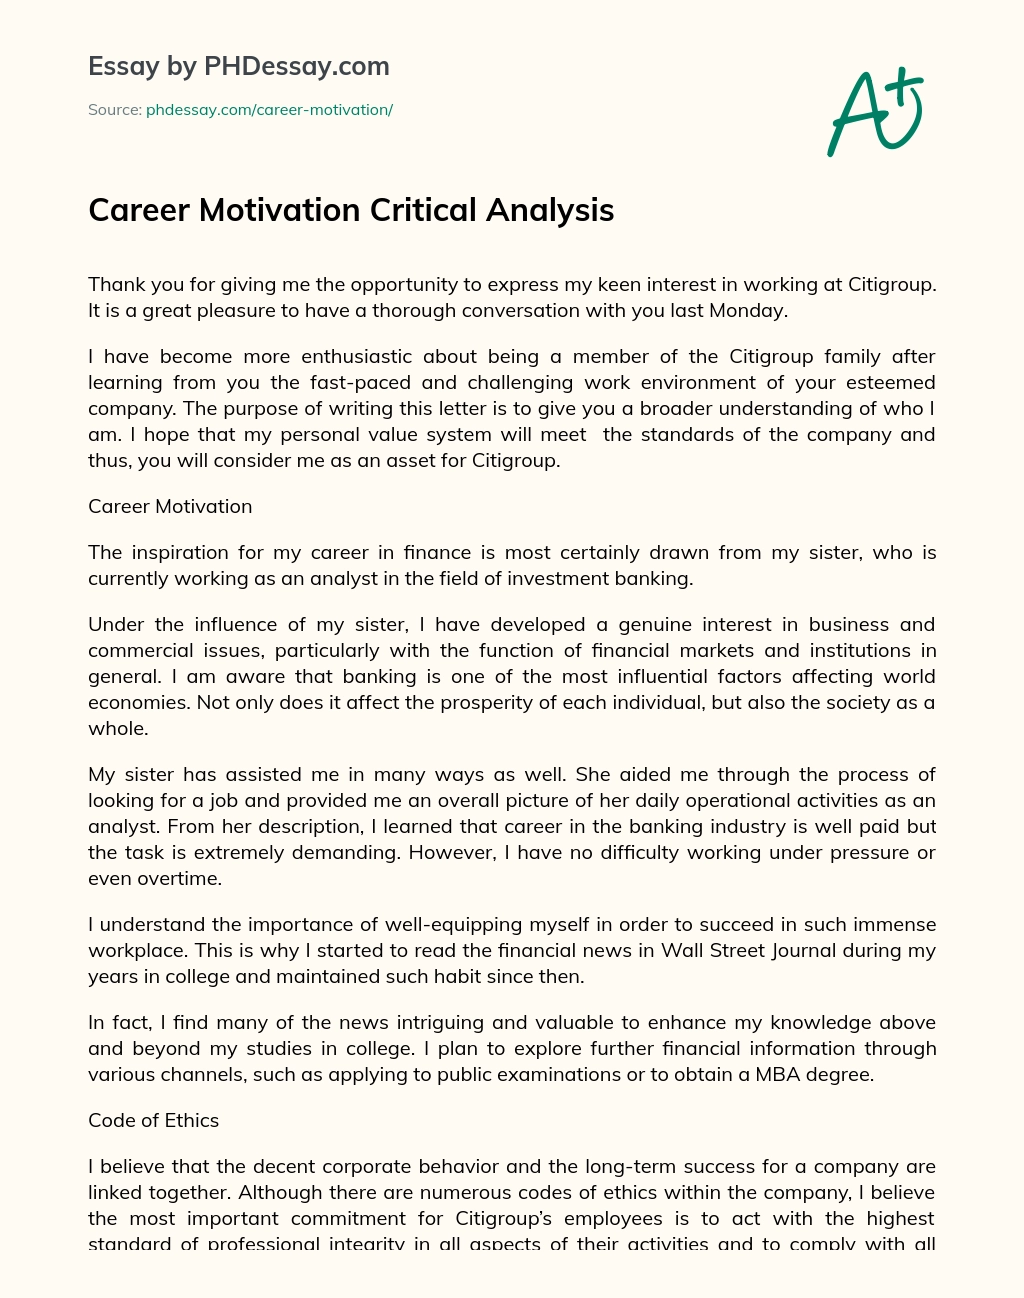 Career Motivation Critical Analysis essay